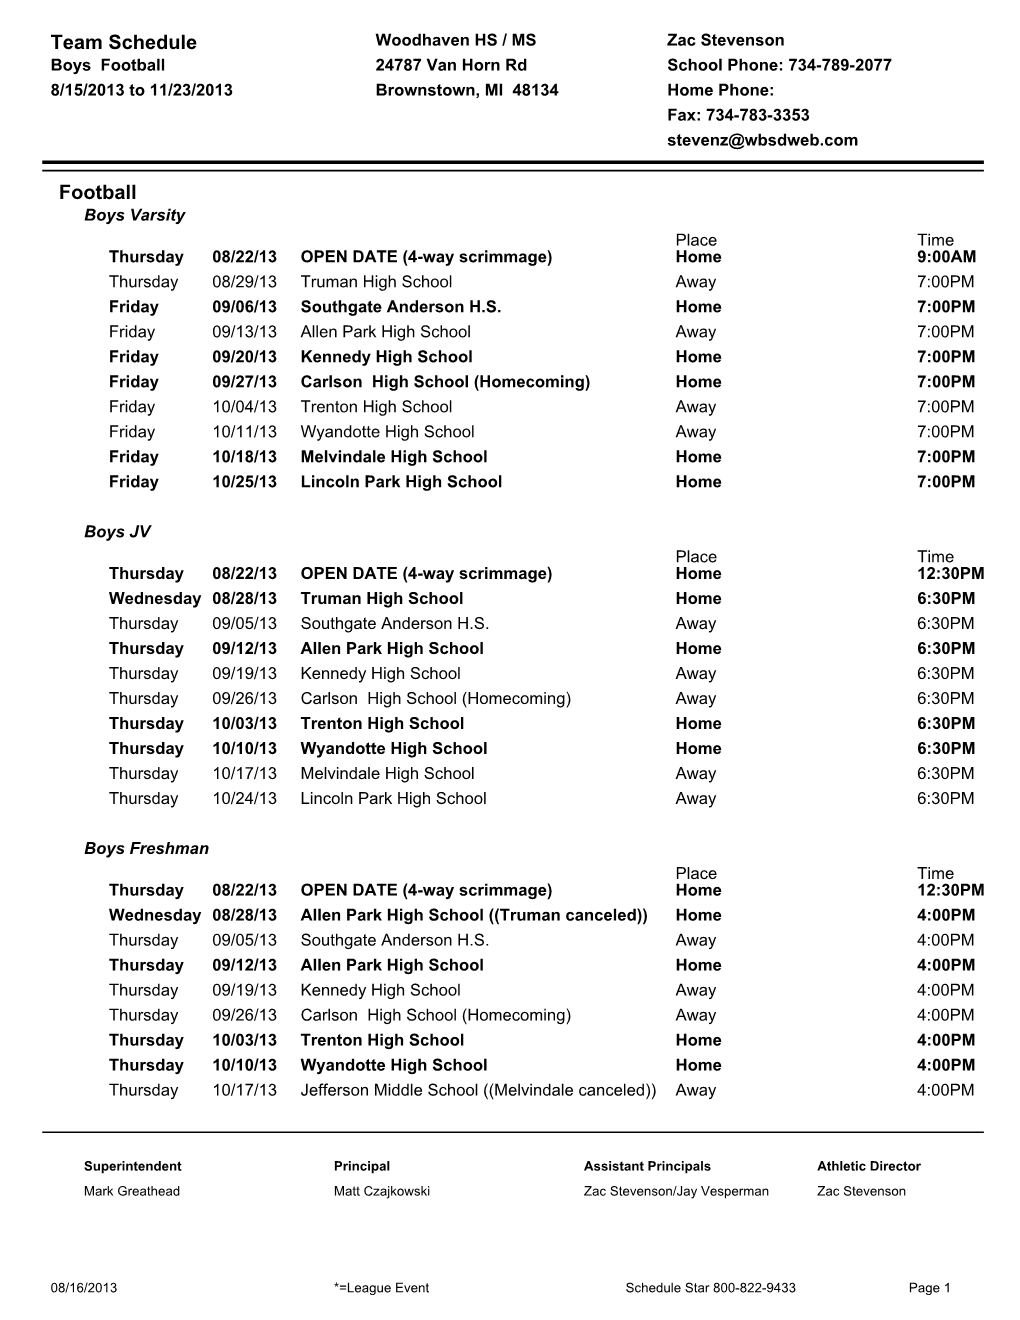 Team Schedule Football